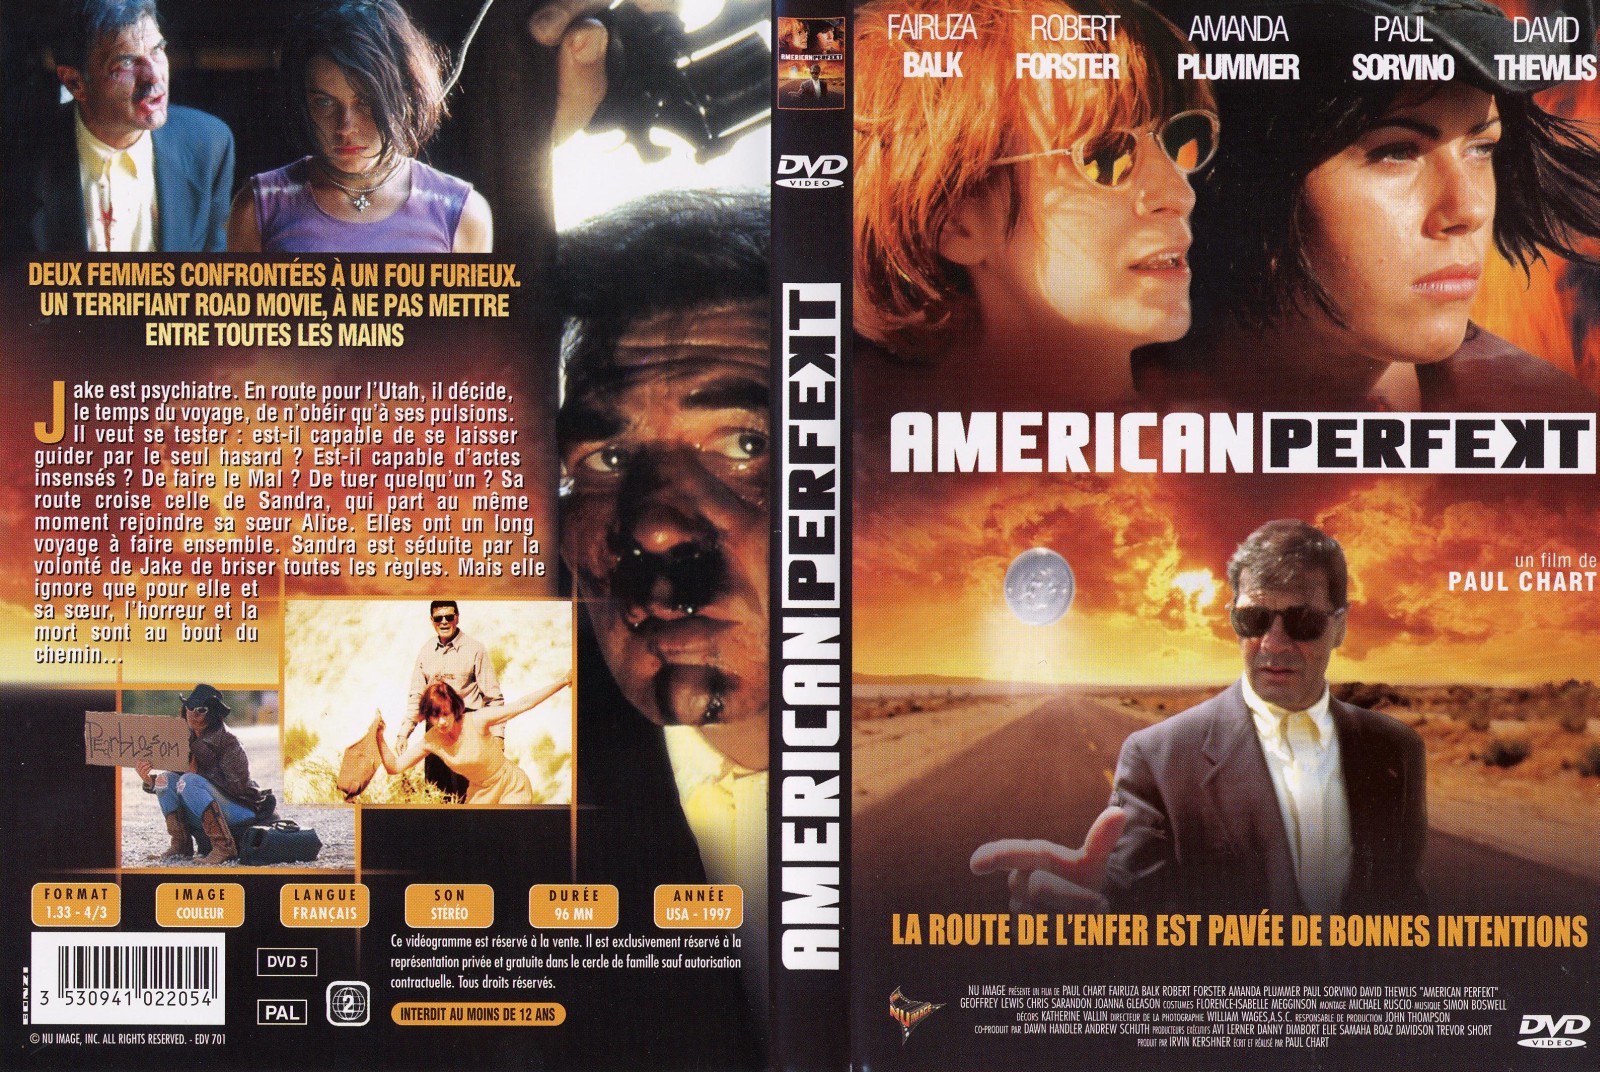 Jaquette DVD American Perfekt